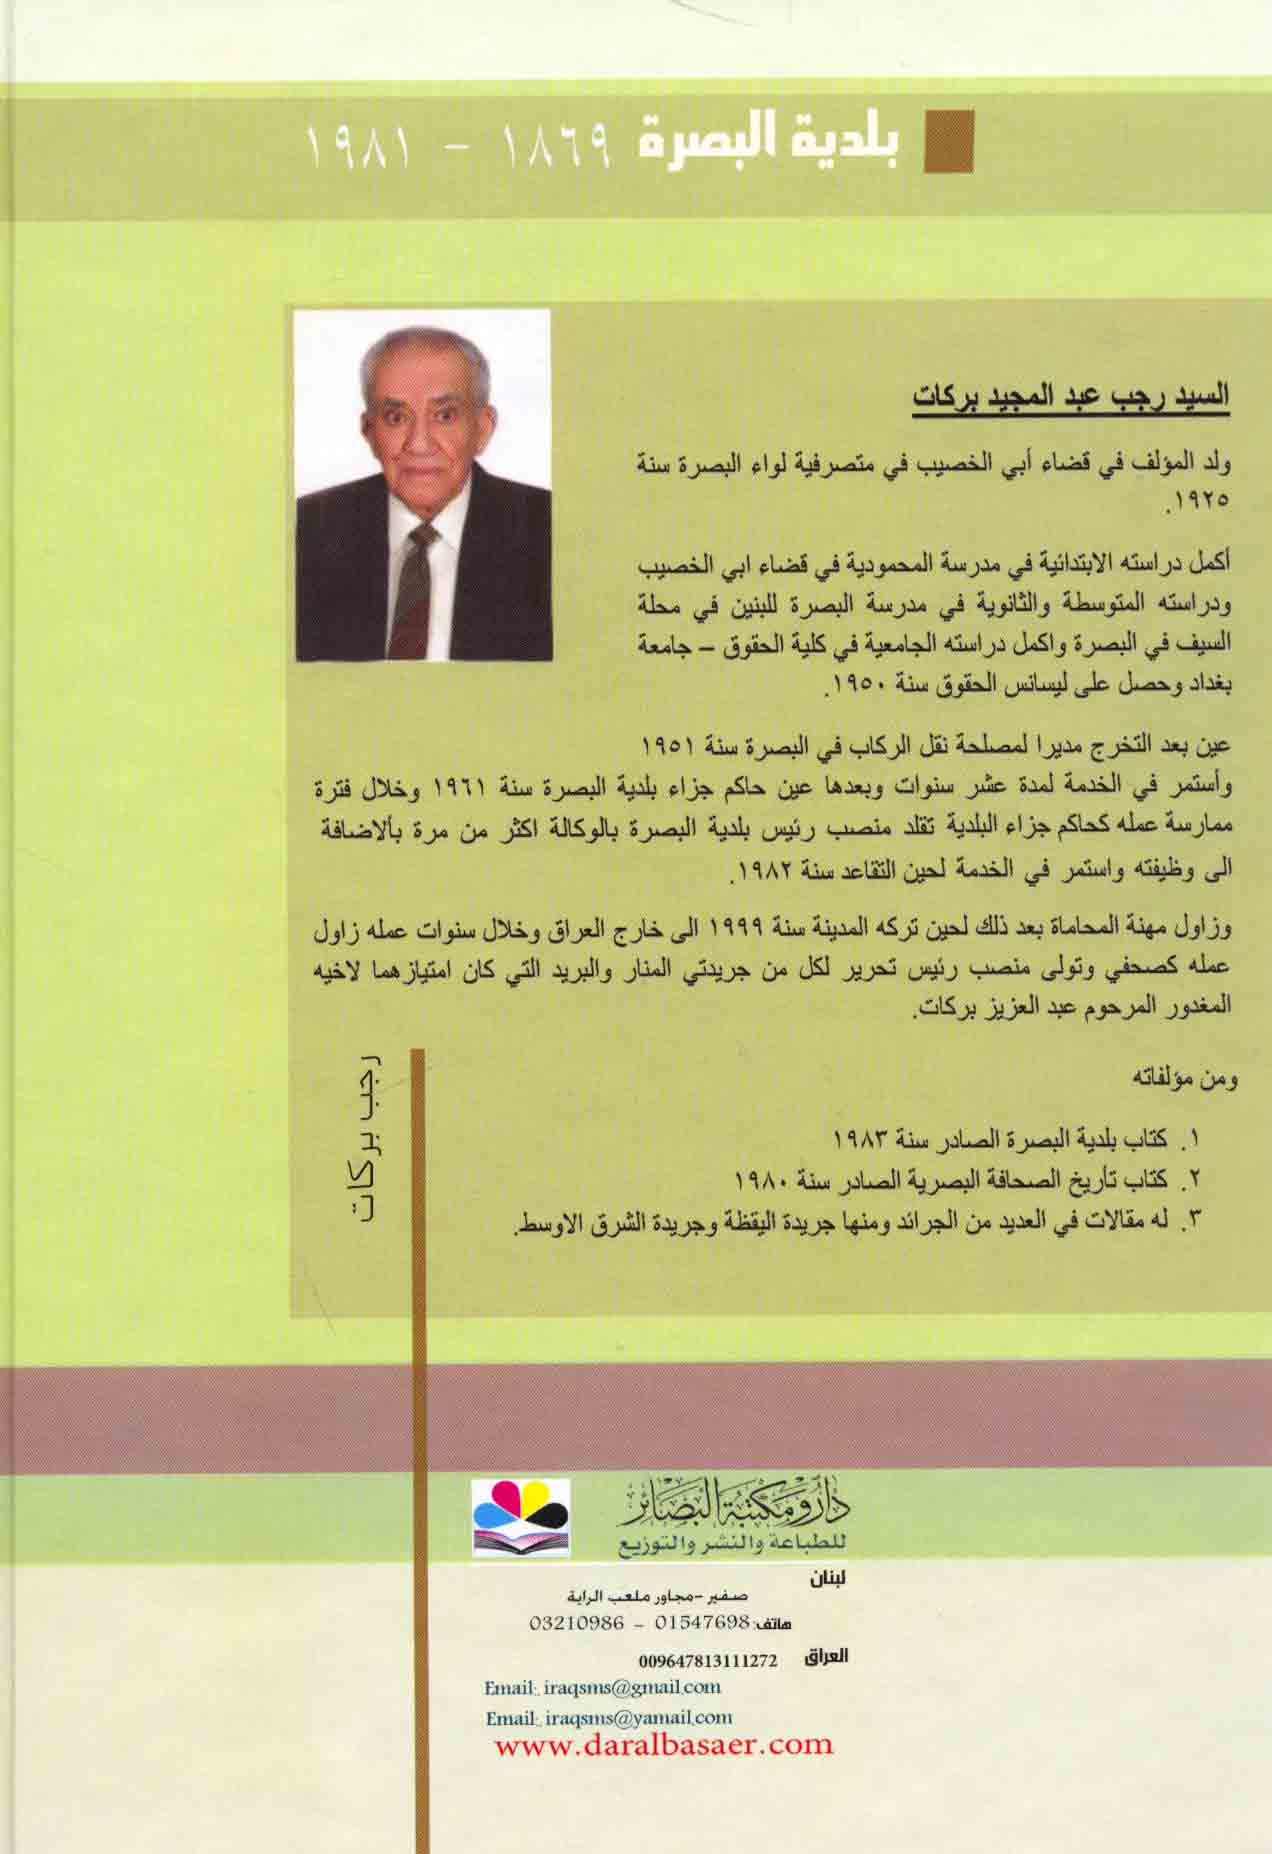 بـلـديـة الـبـصـرة 1869 1981 Baladiyat Al Basrah 1869 1981 Arabicbookshop Net Supplier Of Arabic Books